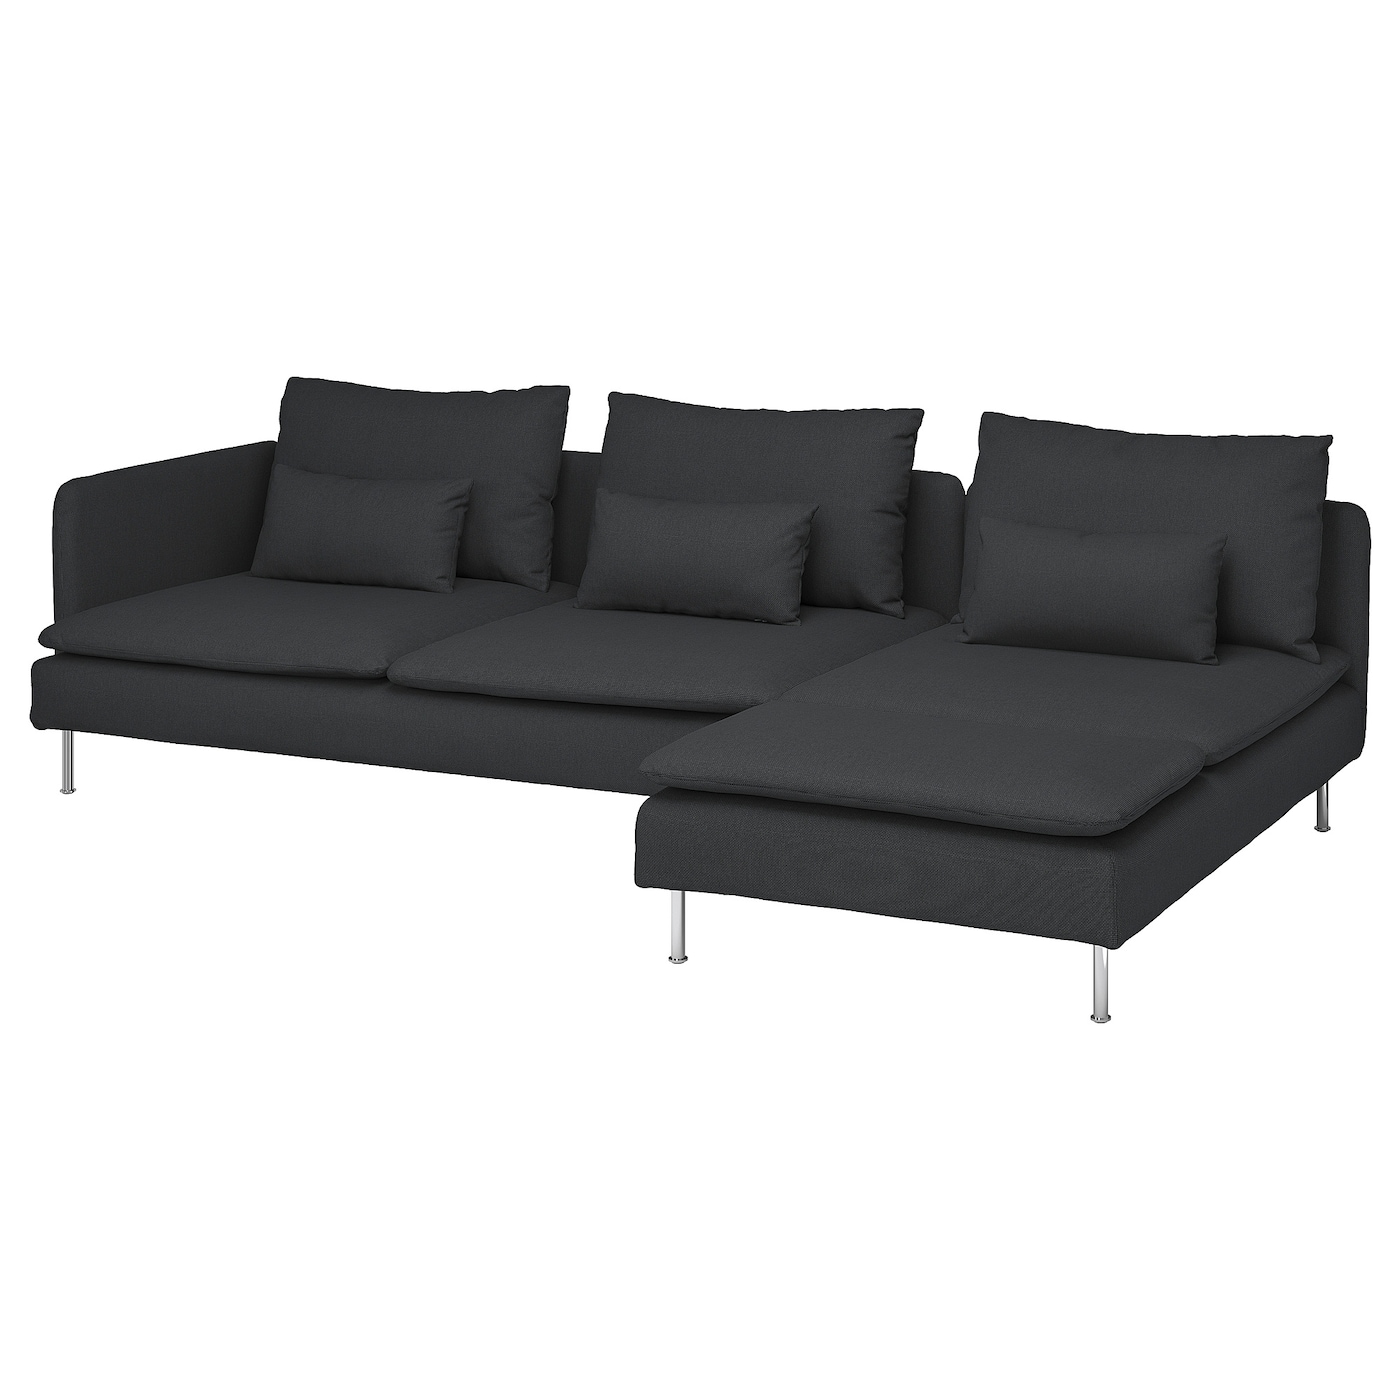 СЁДЕРХАМН 4-местный диван + диван, раскладной Фридтуна/темно-серый SODERHAMN IKEA диван куба раскладной сканди 11